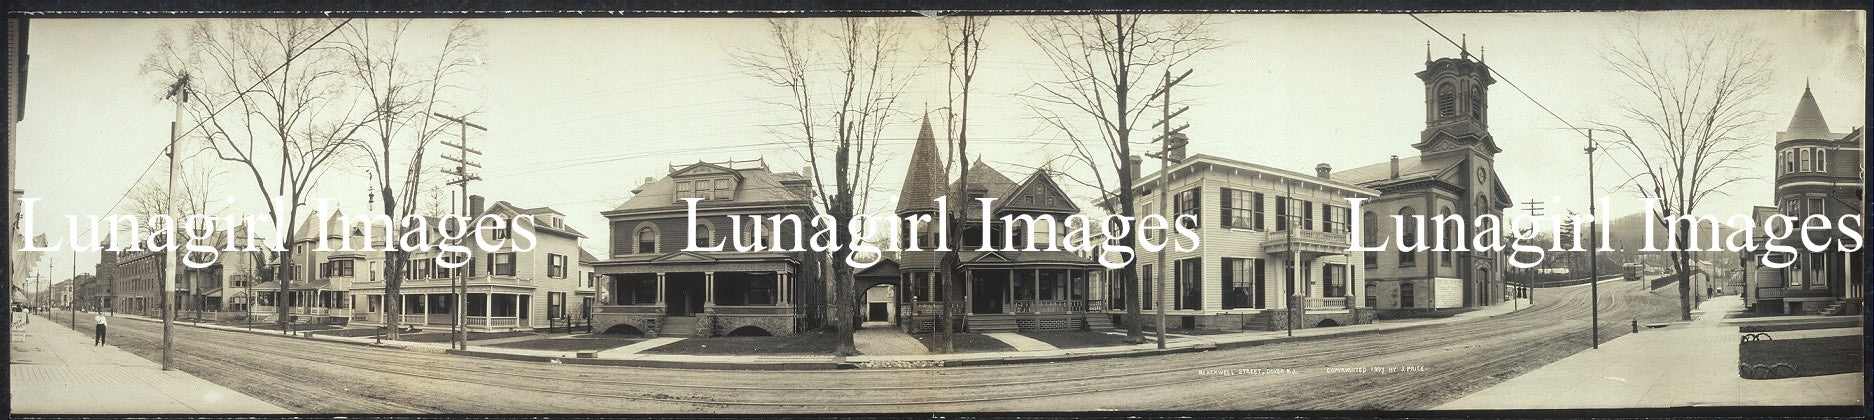 Vintage Panoramic Photographs: 1000 Images - Lunagirl